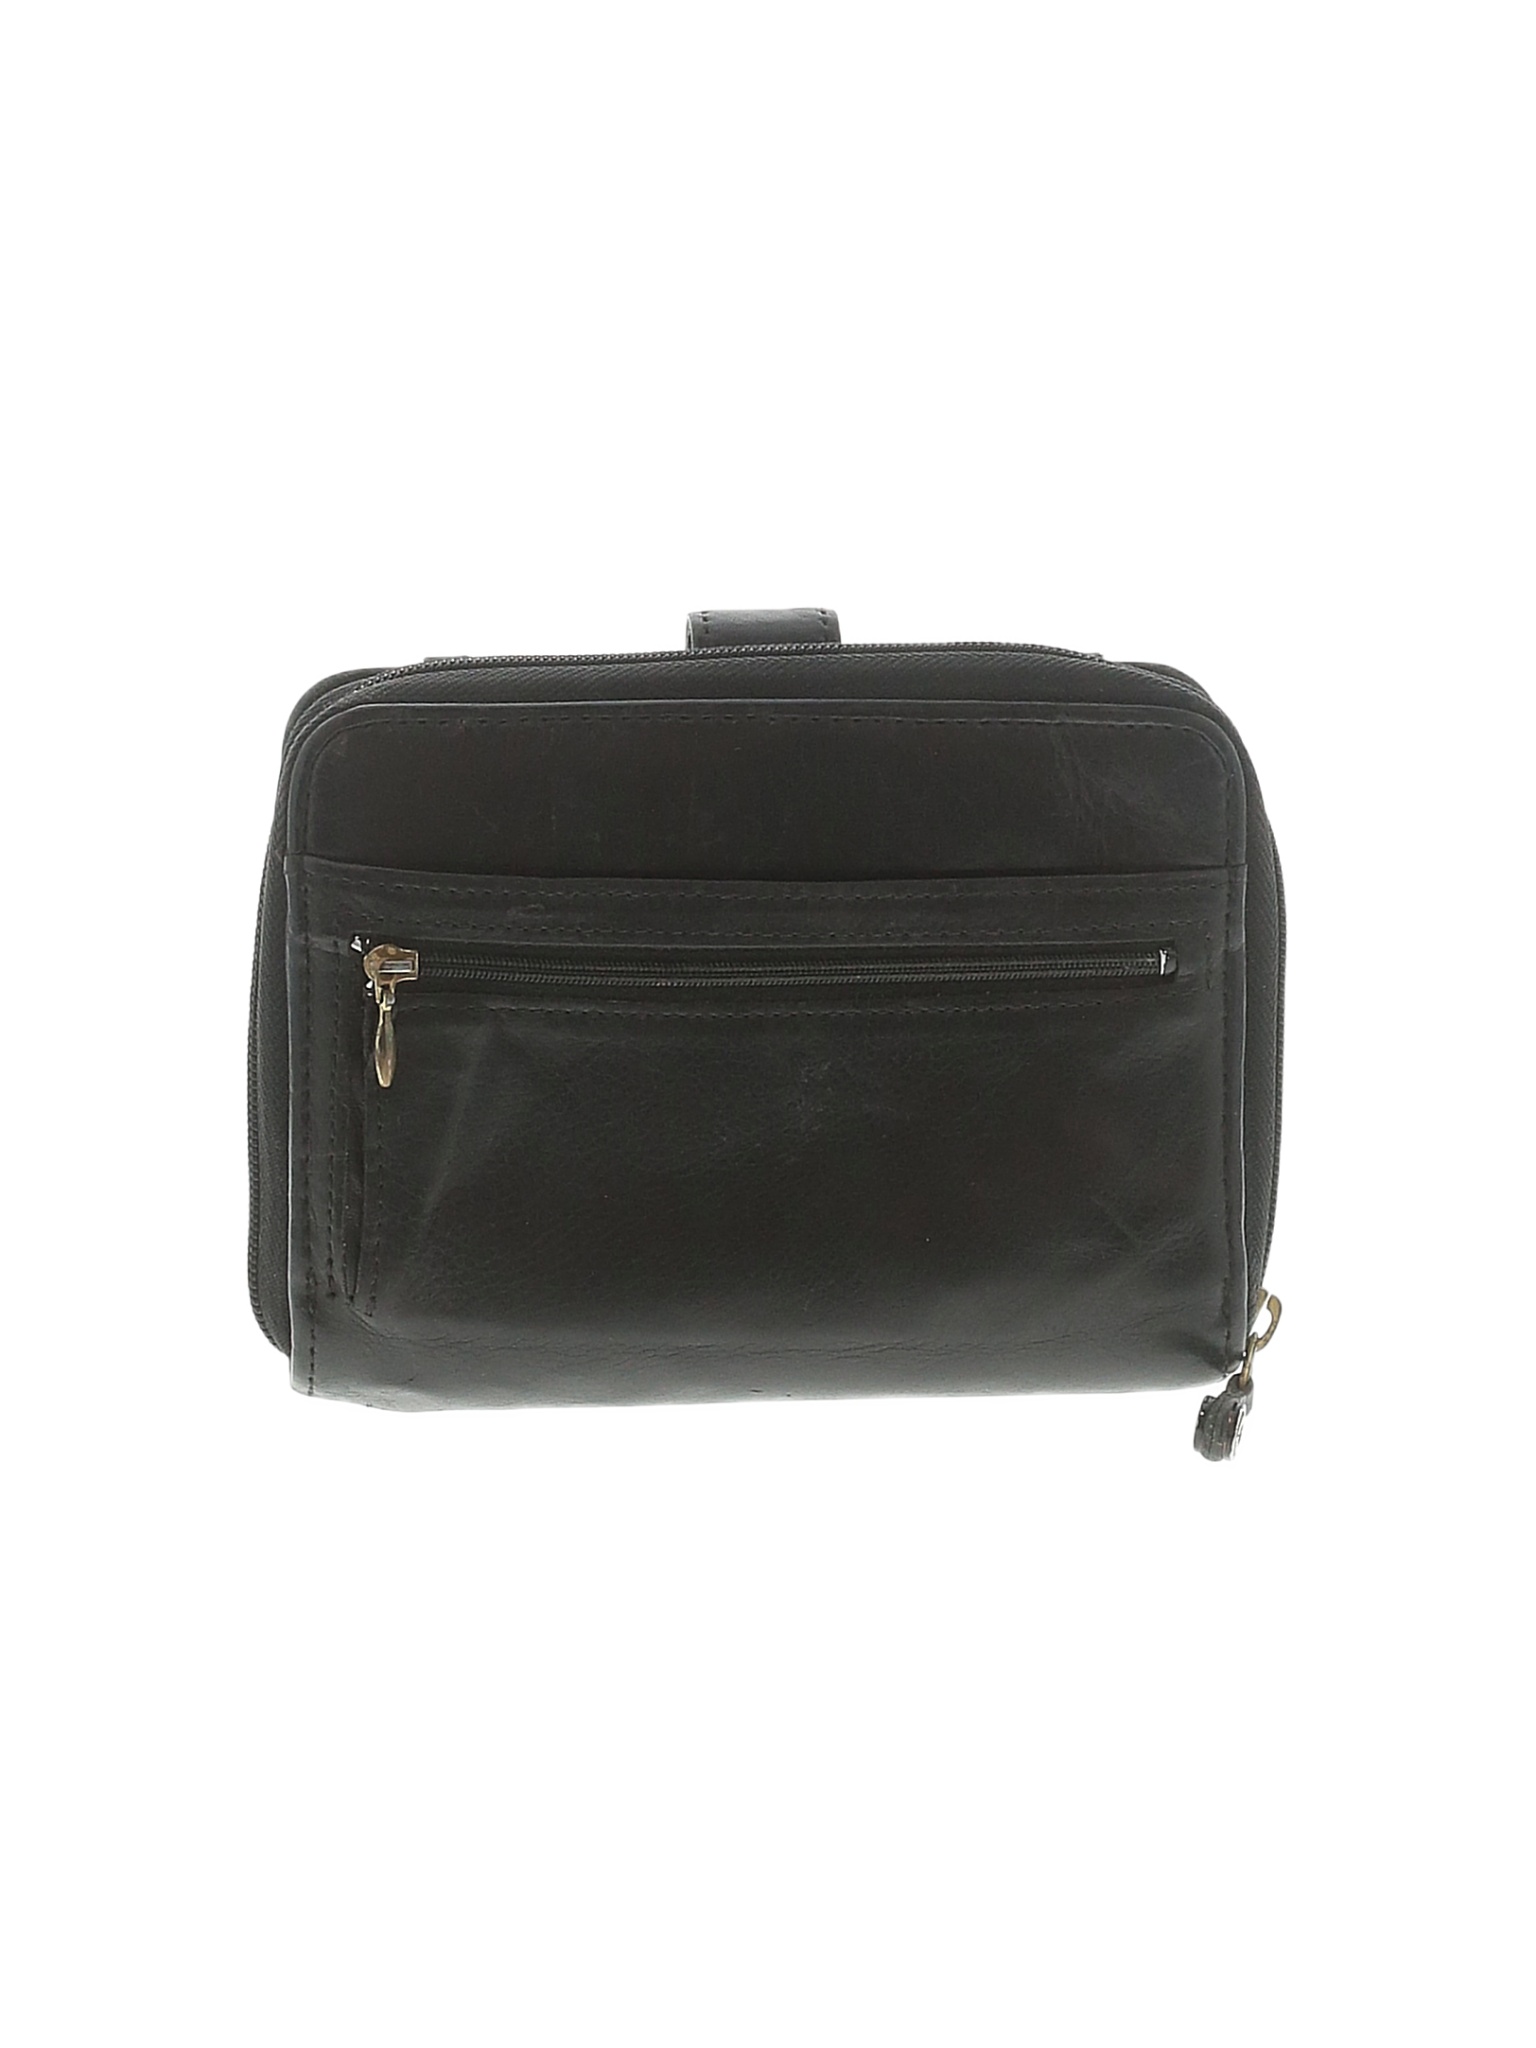 Franklin Covey, Bags, Franklin Covey Black Leather Hannah Laptop  Messenger Bag Purse 72705